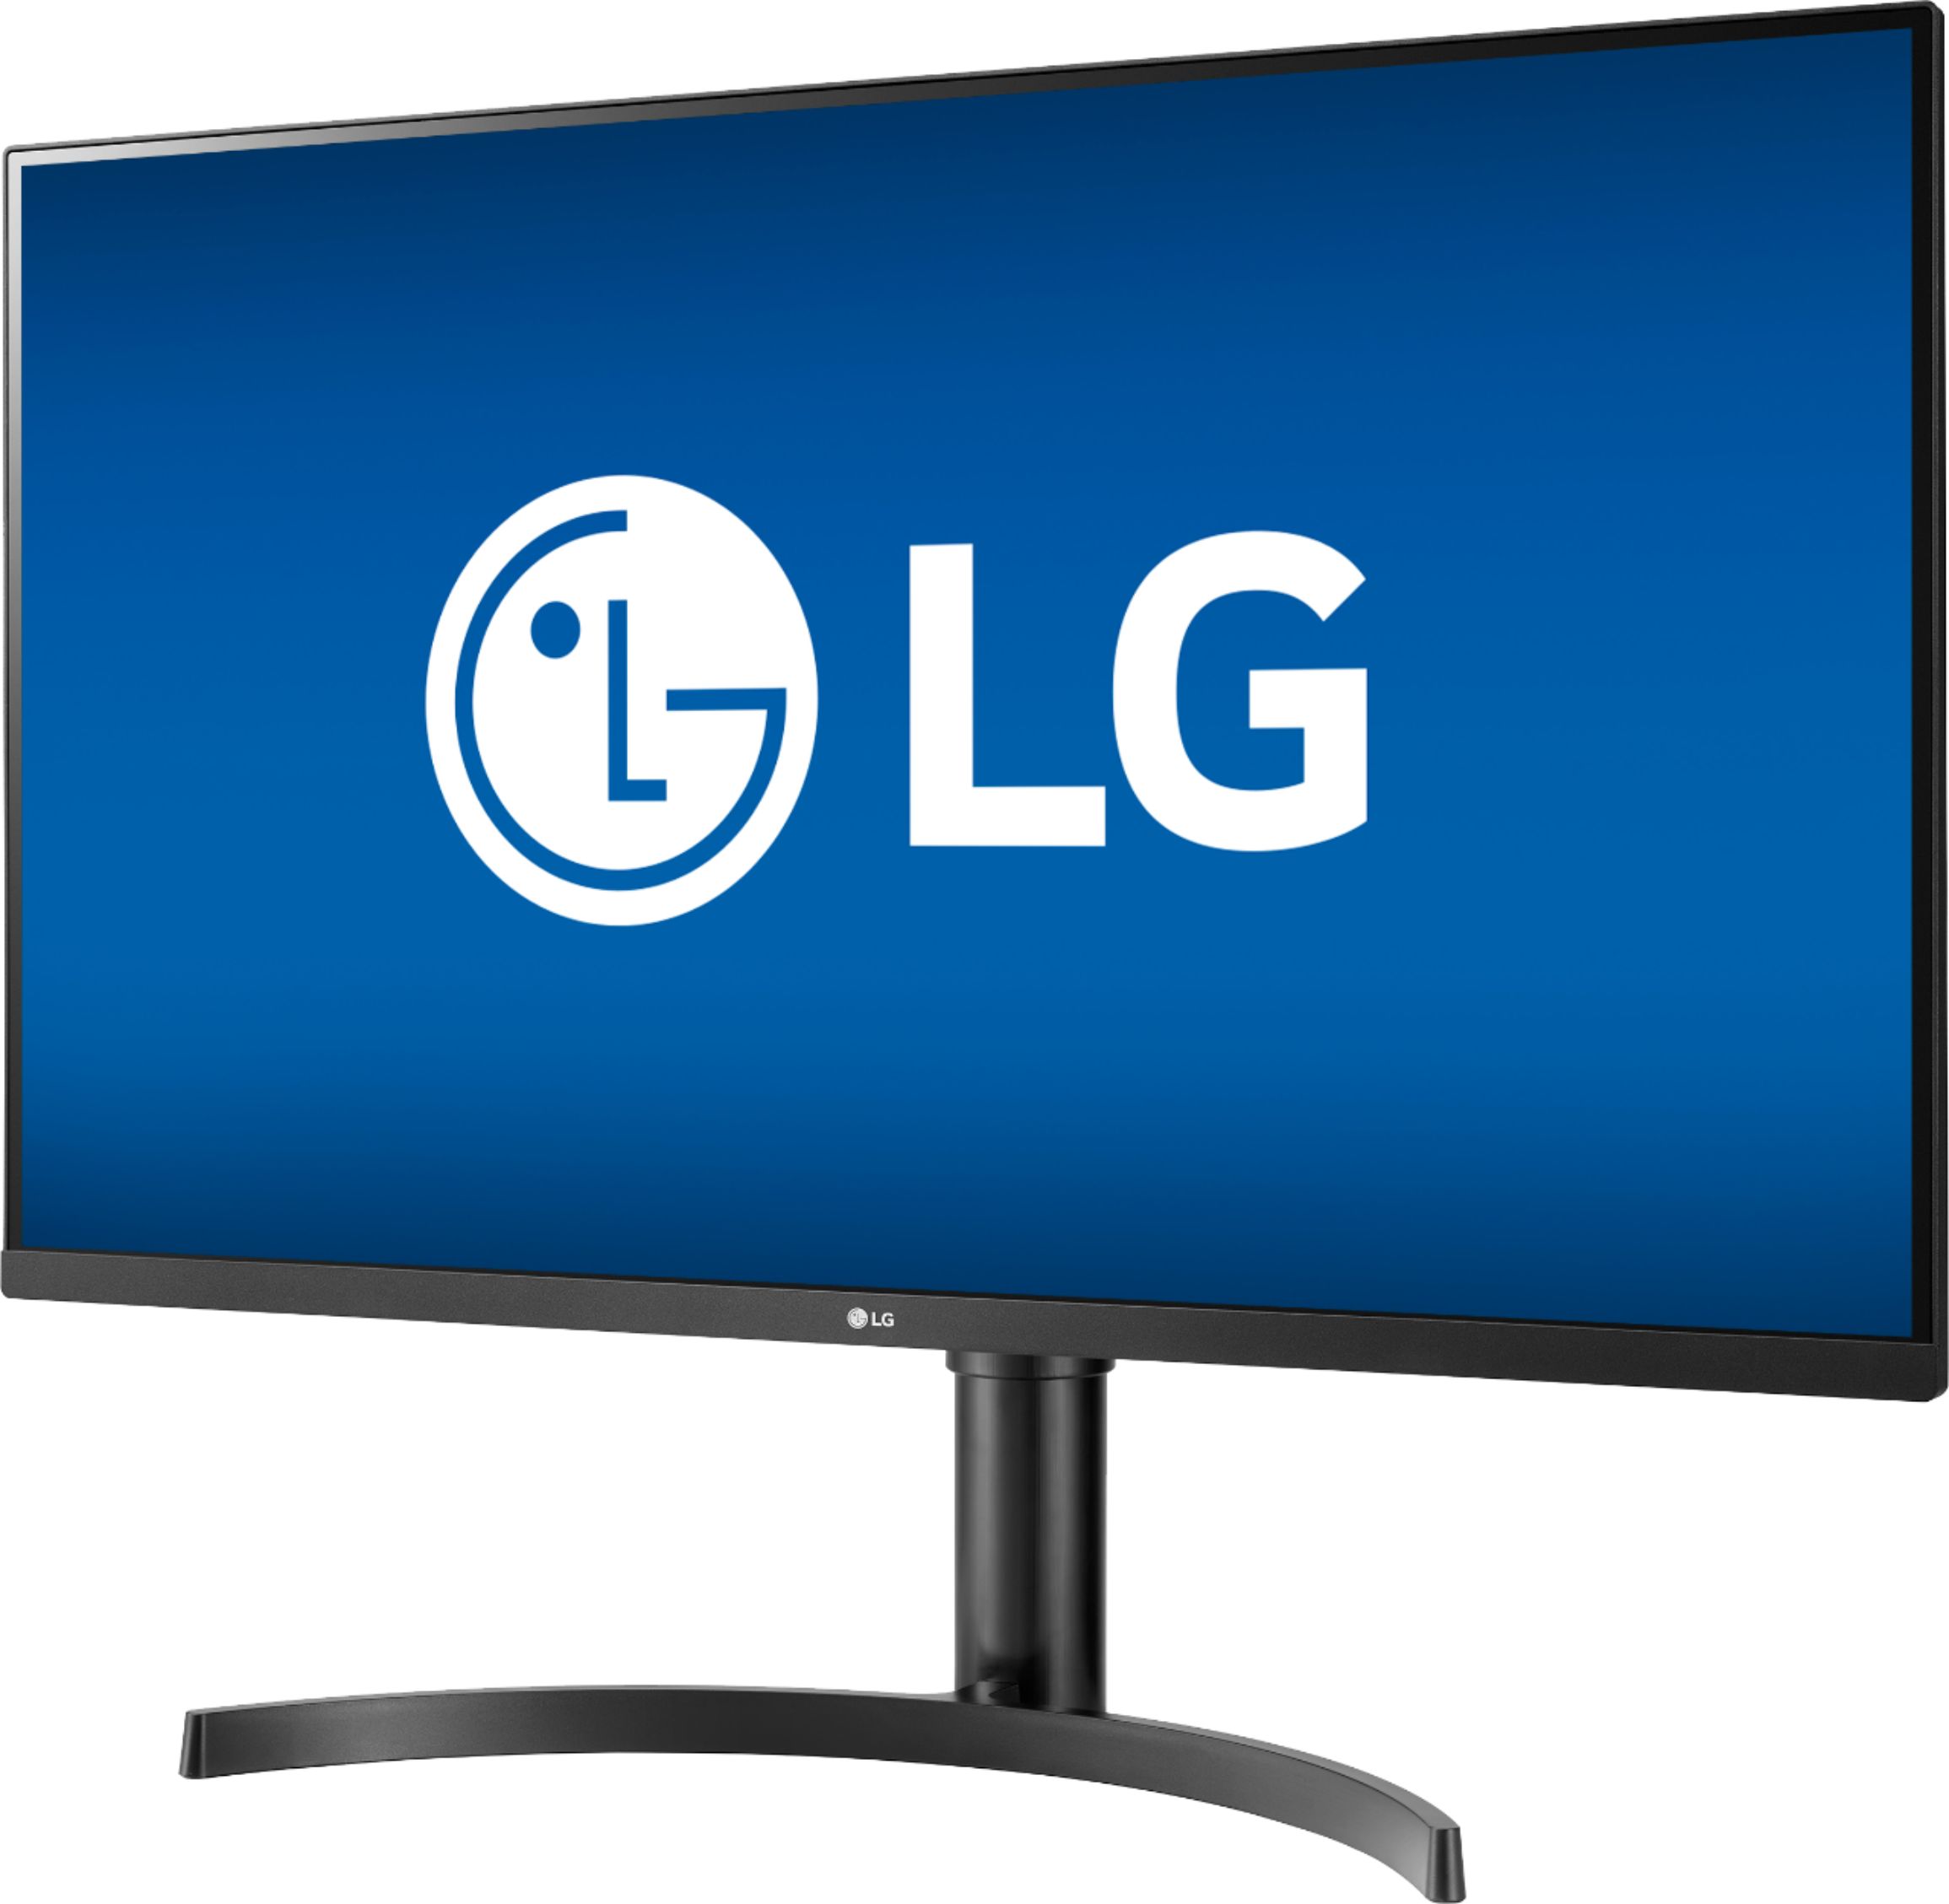 Angle View: LG - 32" IPS LED QHD FreeSync Monitor with HDR (HDMI, DisplayPort) - Black